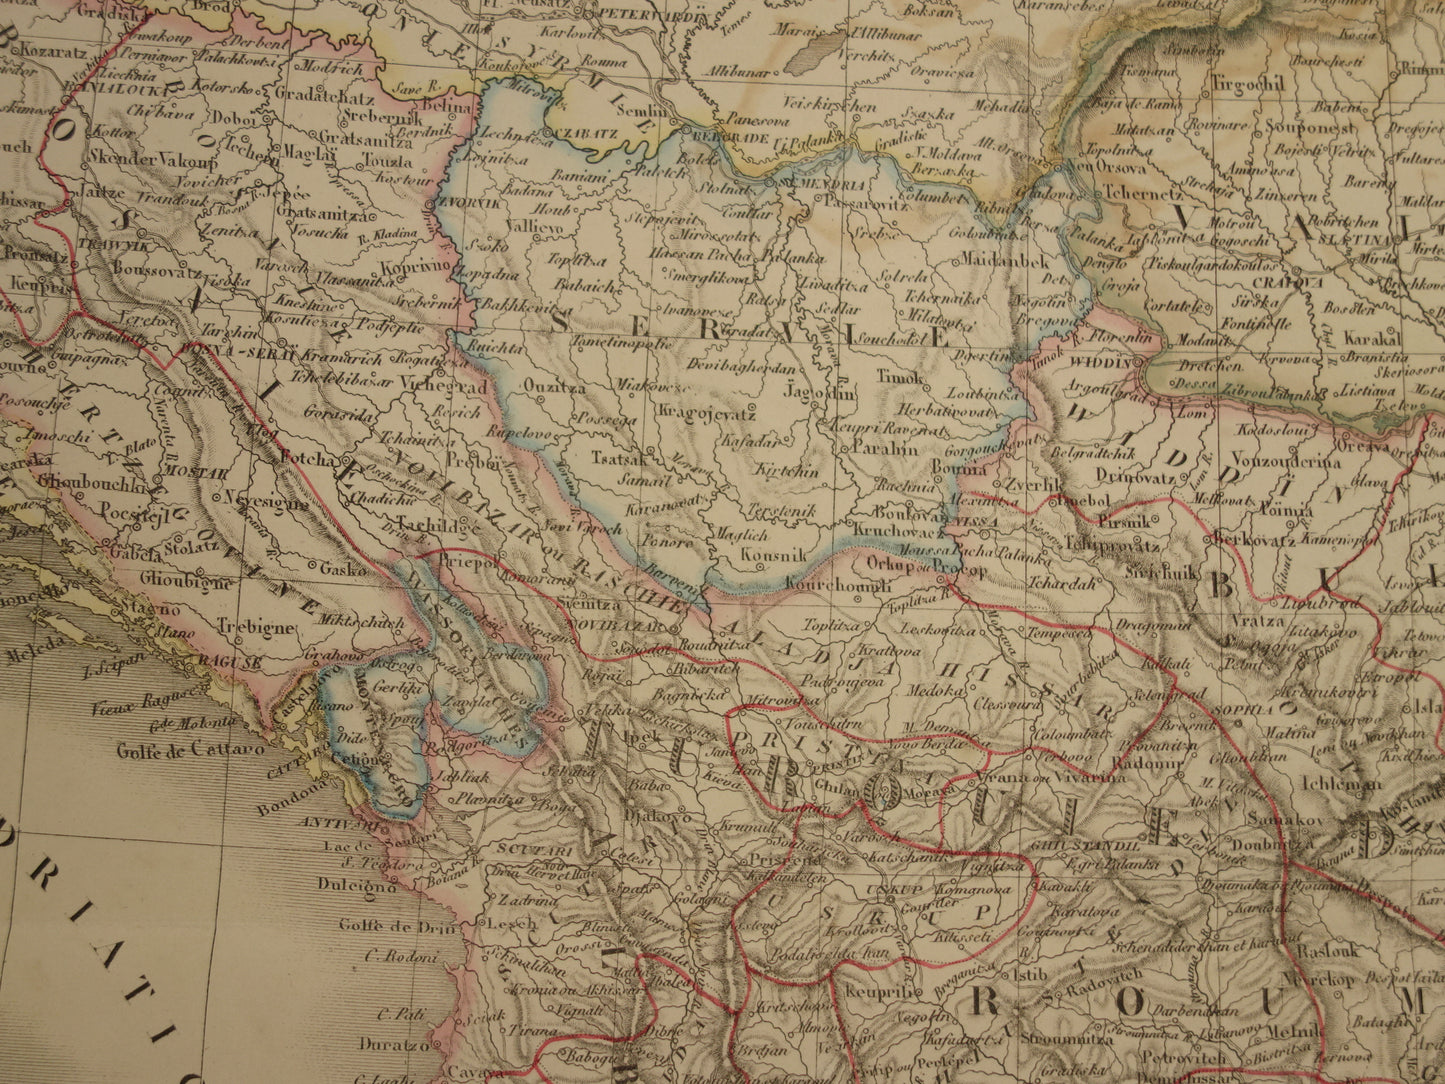 Oude kaart Griekenland en Turkse Rijk in de Balkan in 1851 - Antieke Franse kaart Turkije Servië Roemenië - handgekleurde vintage landkaarten